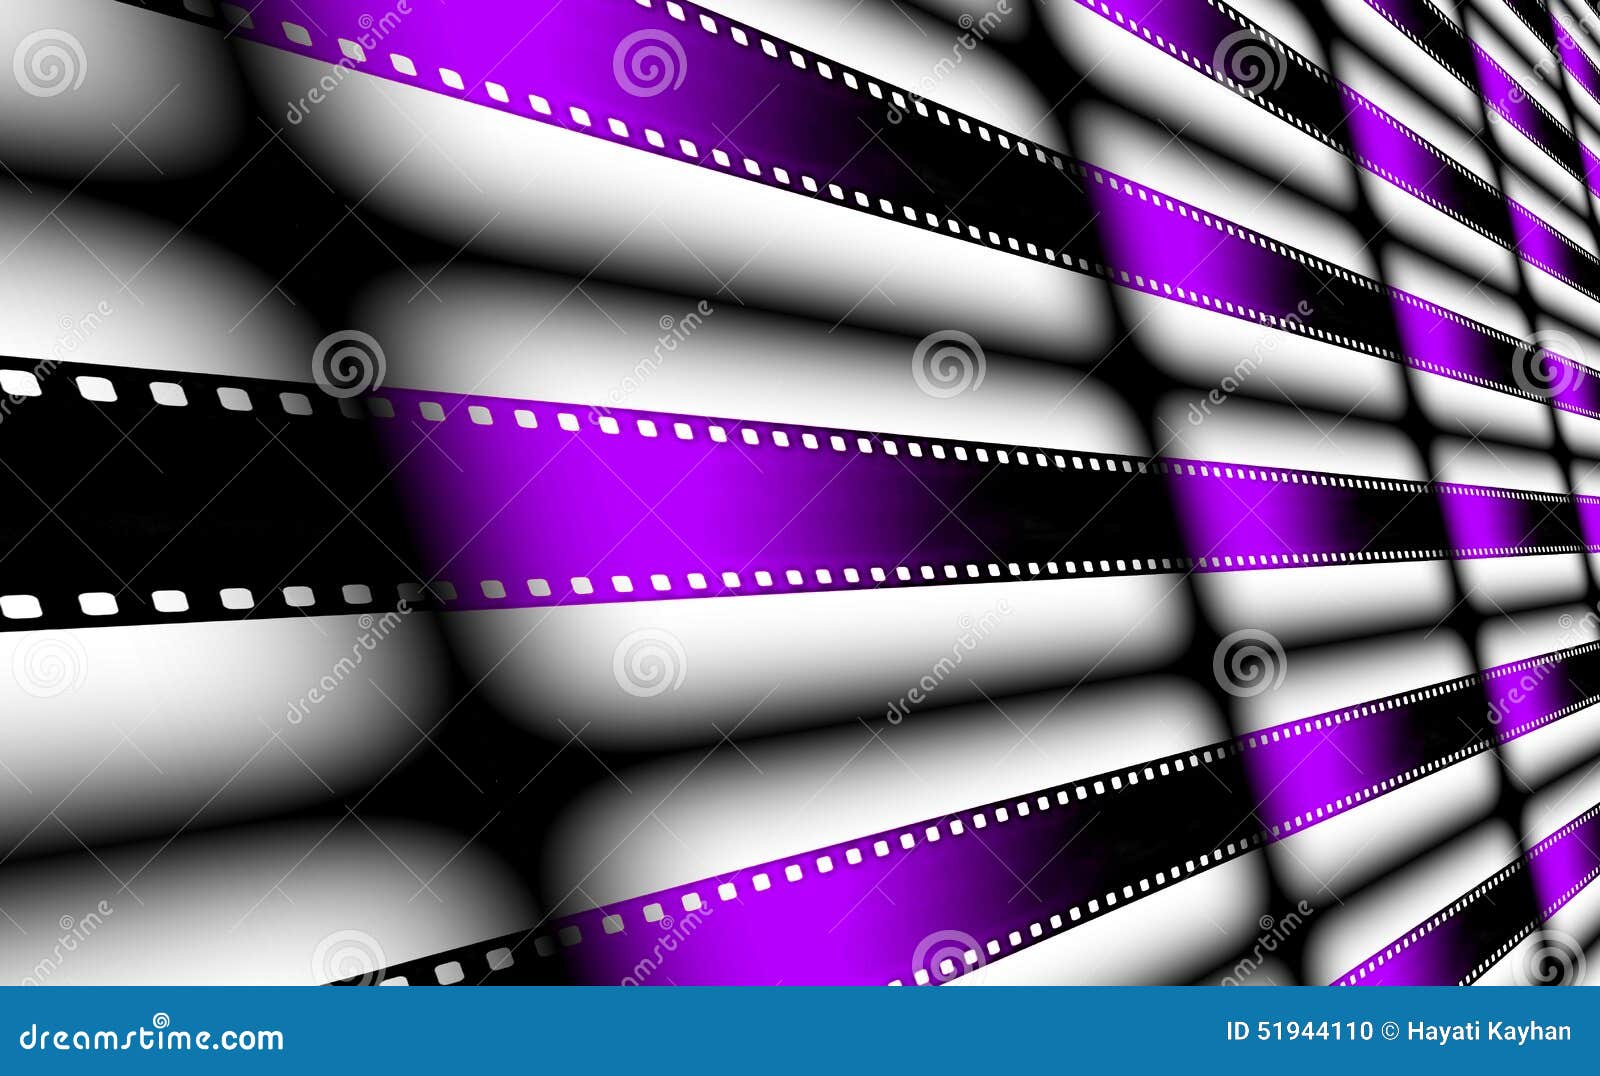 227 Purple Film Strip Background Stock Photos - Free & Royalty